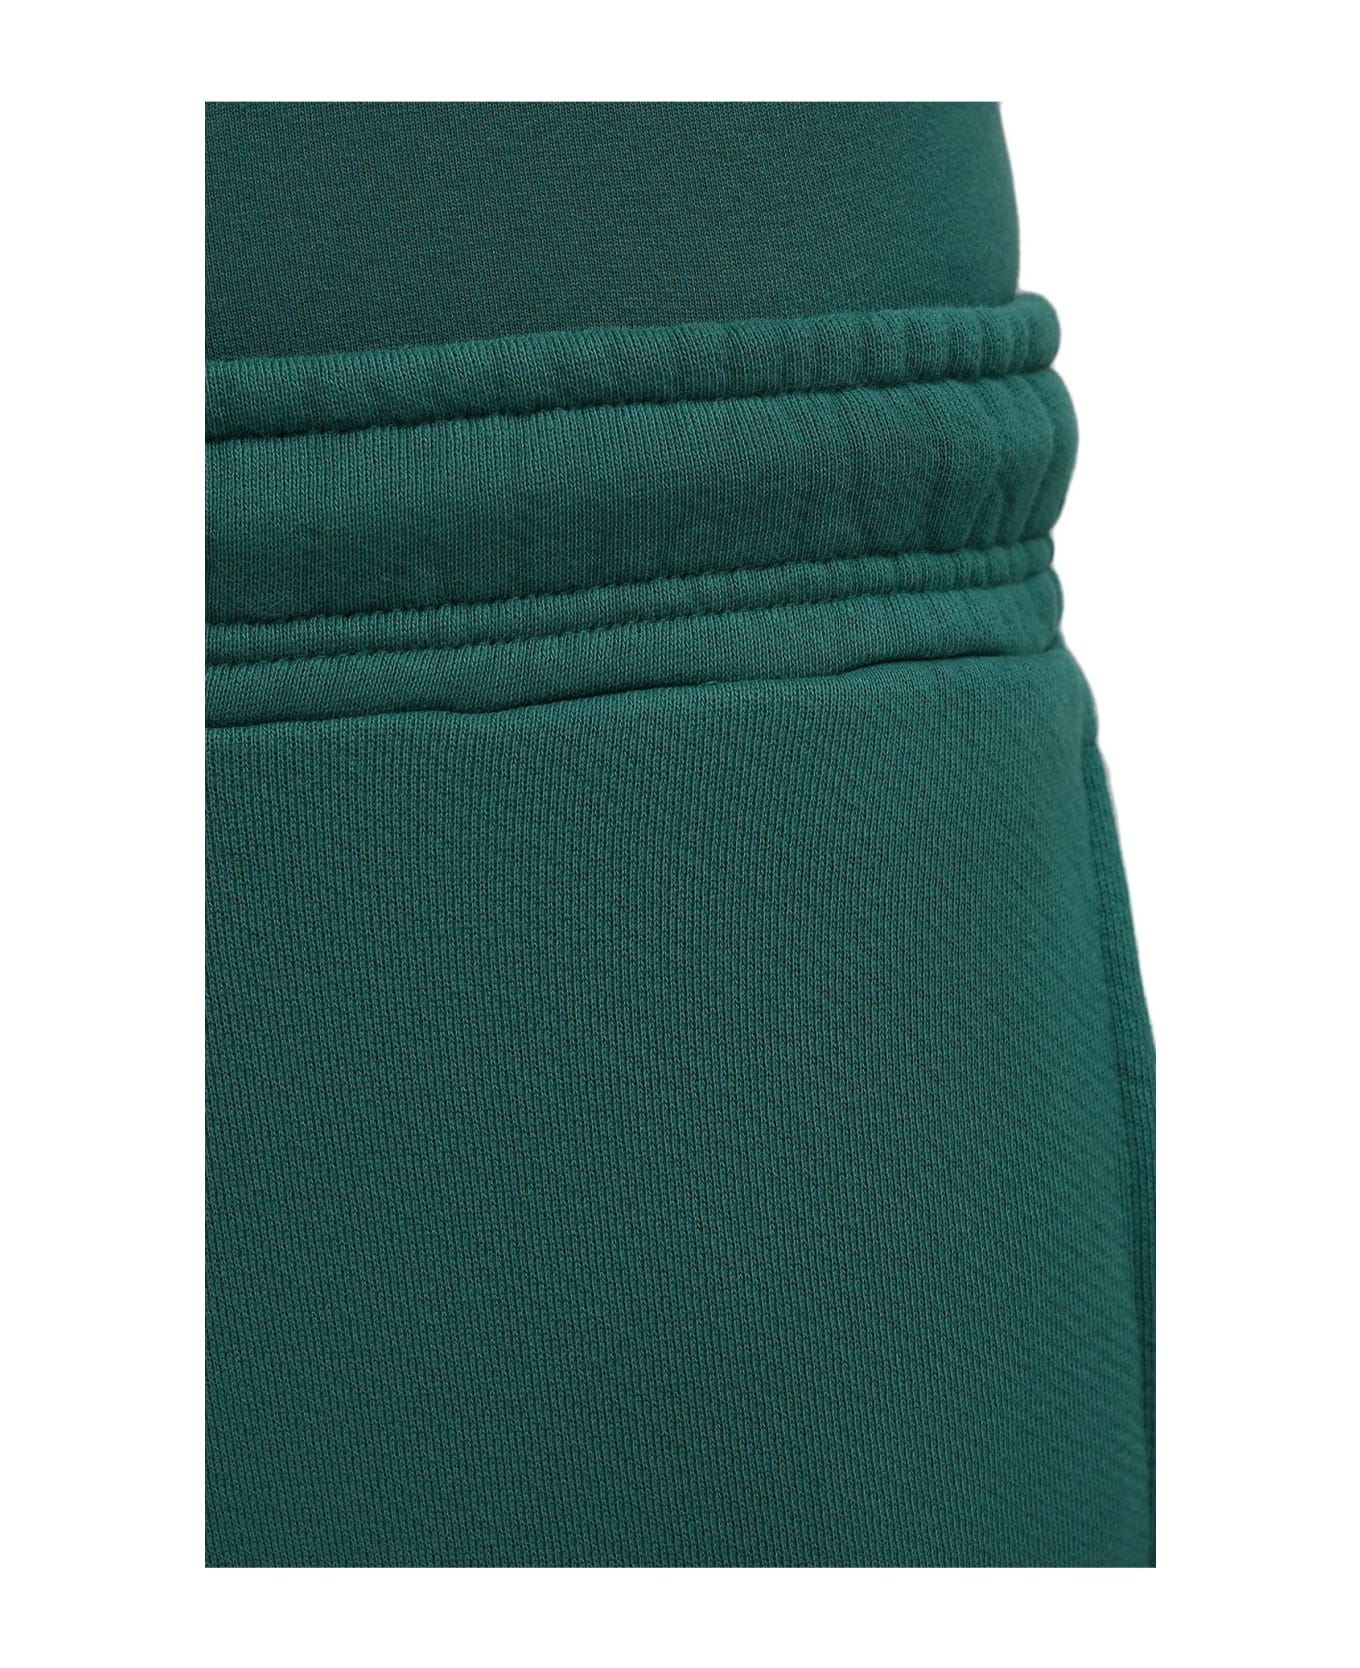 Palm Angels Cotton Sweatpants - Green